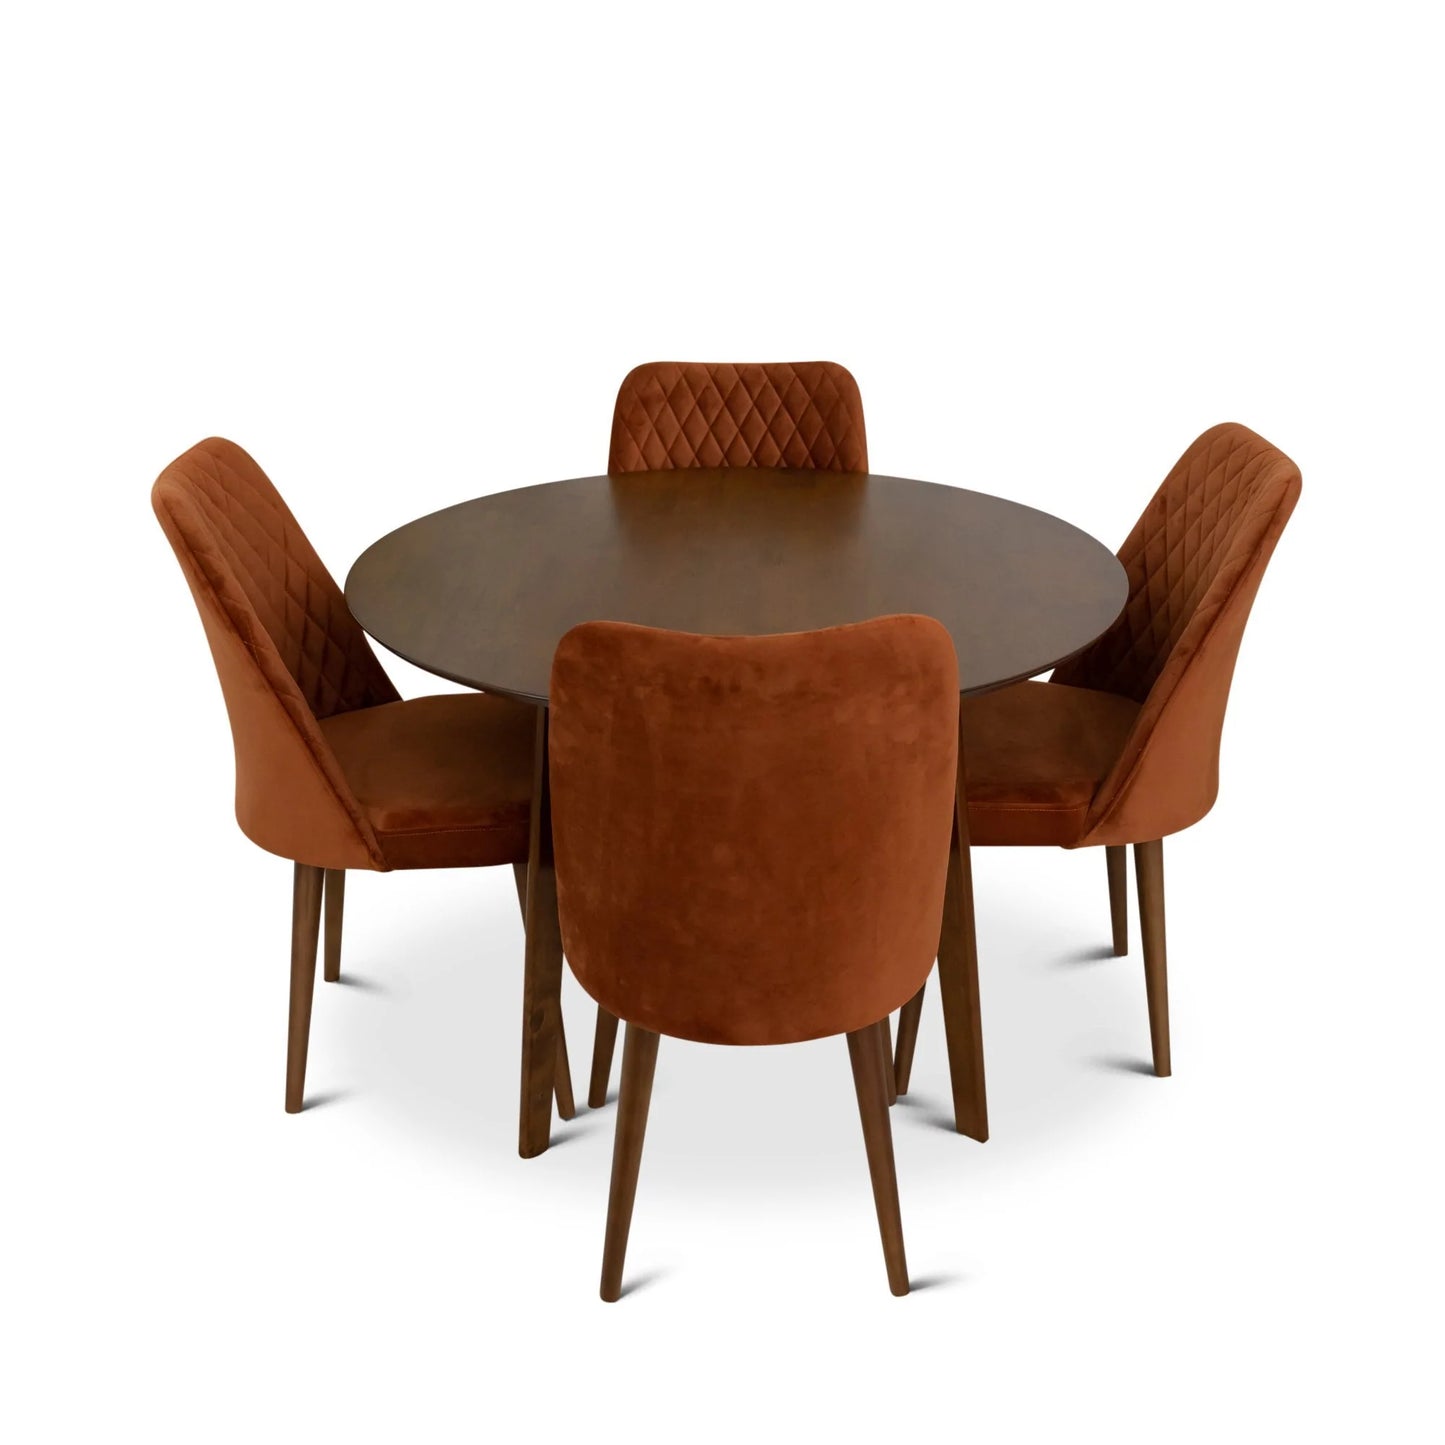 Aliana Dining Set with 4 Evette Orange Chairs (Walnut)